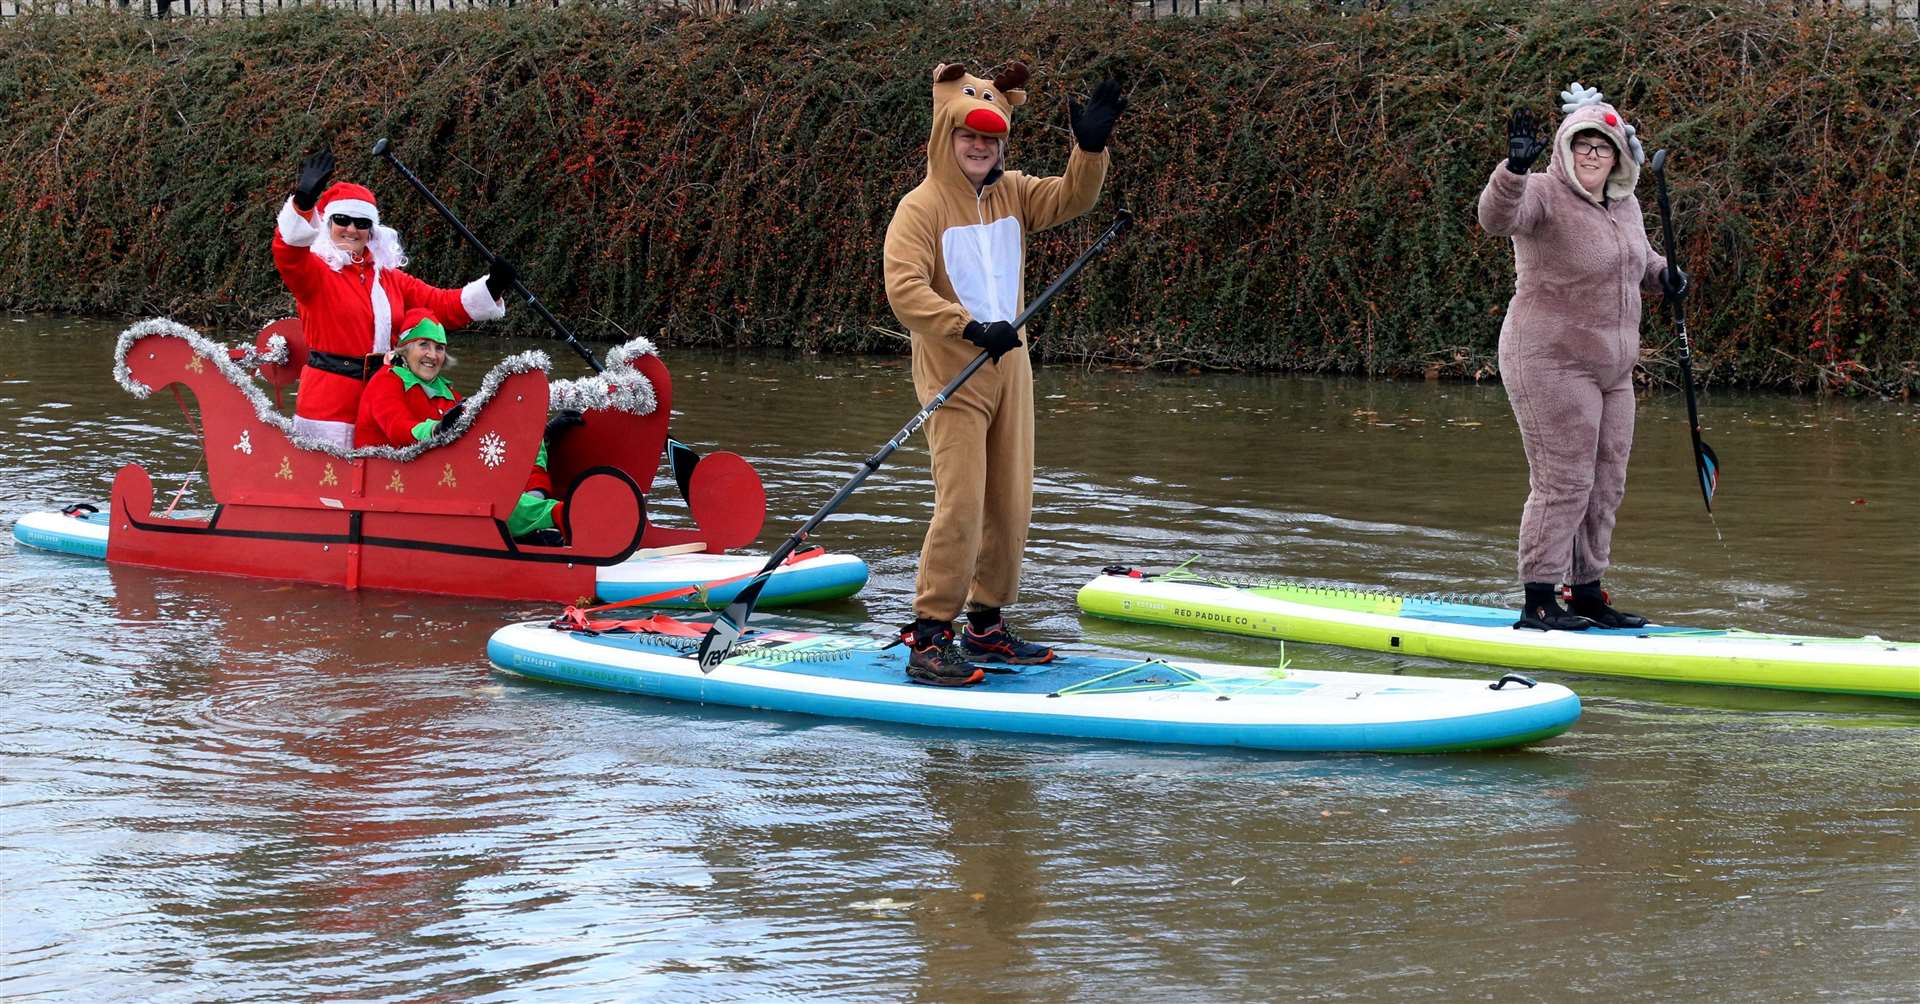 Santa paddle boarders on the river at Tonbridge